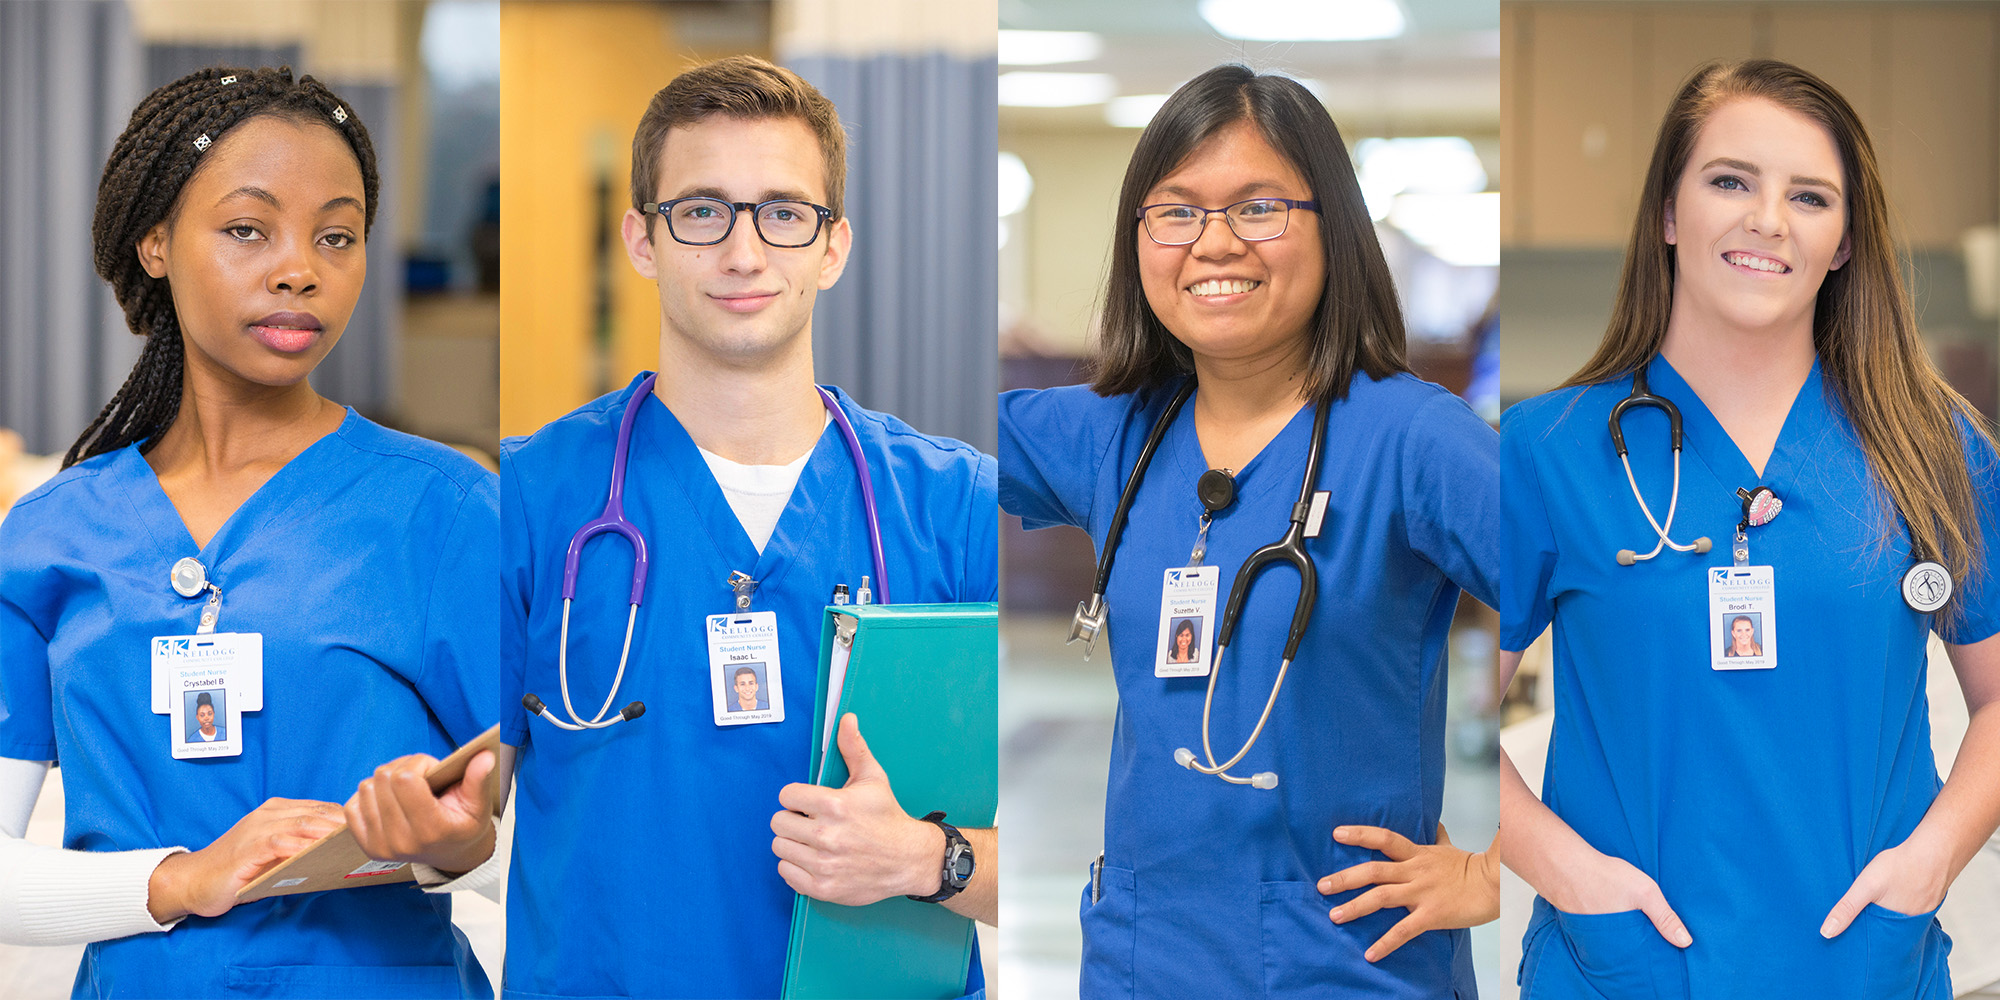 Kcc Nursing Program Prepares Students For Careers In Health Care - The Bruin News